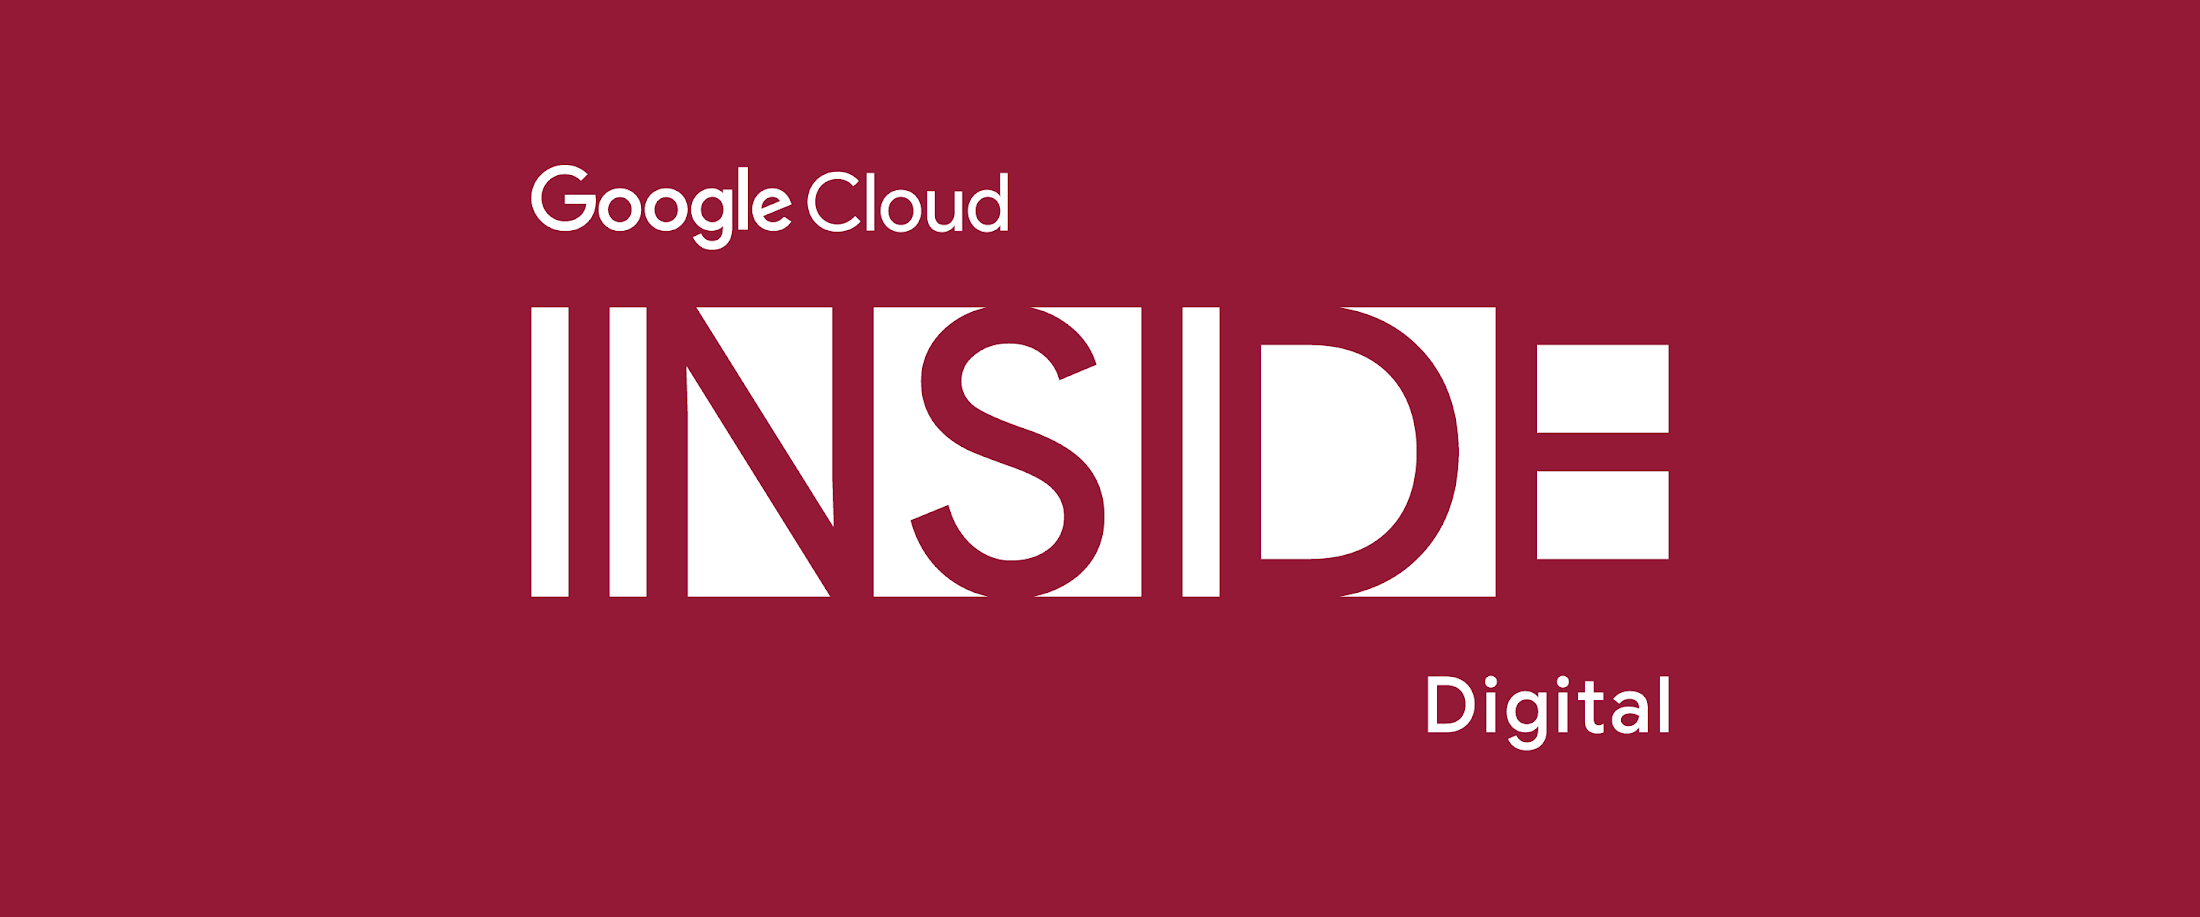 Google Cloud Inside Digital Logo